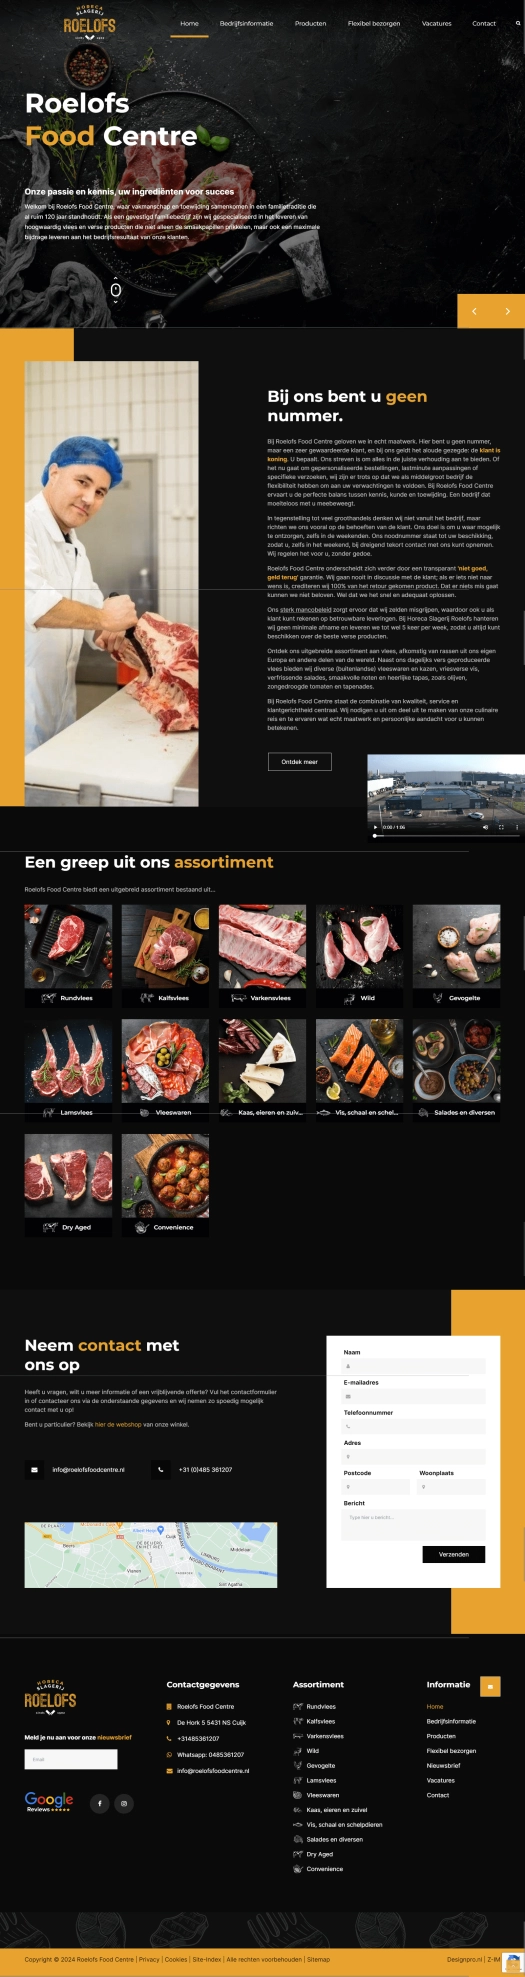 Roelofs Food Centre desktop website